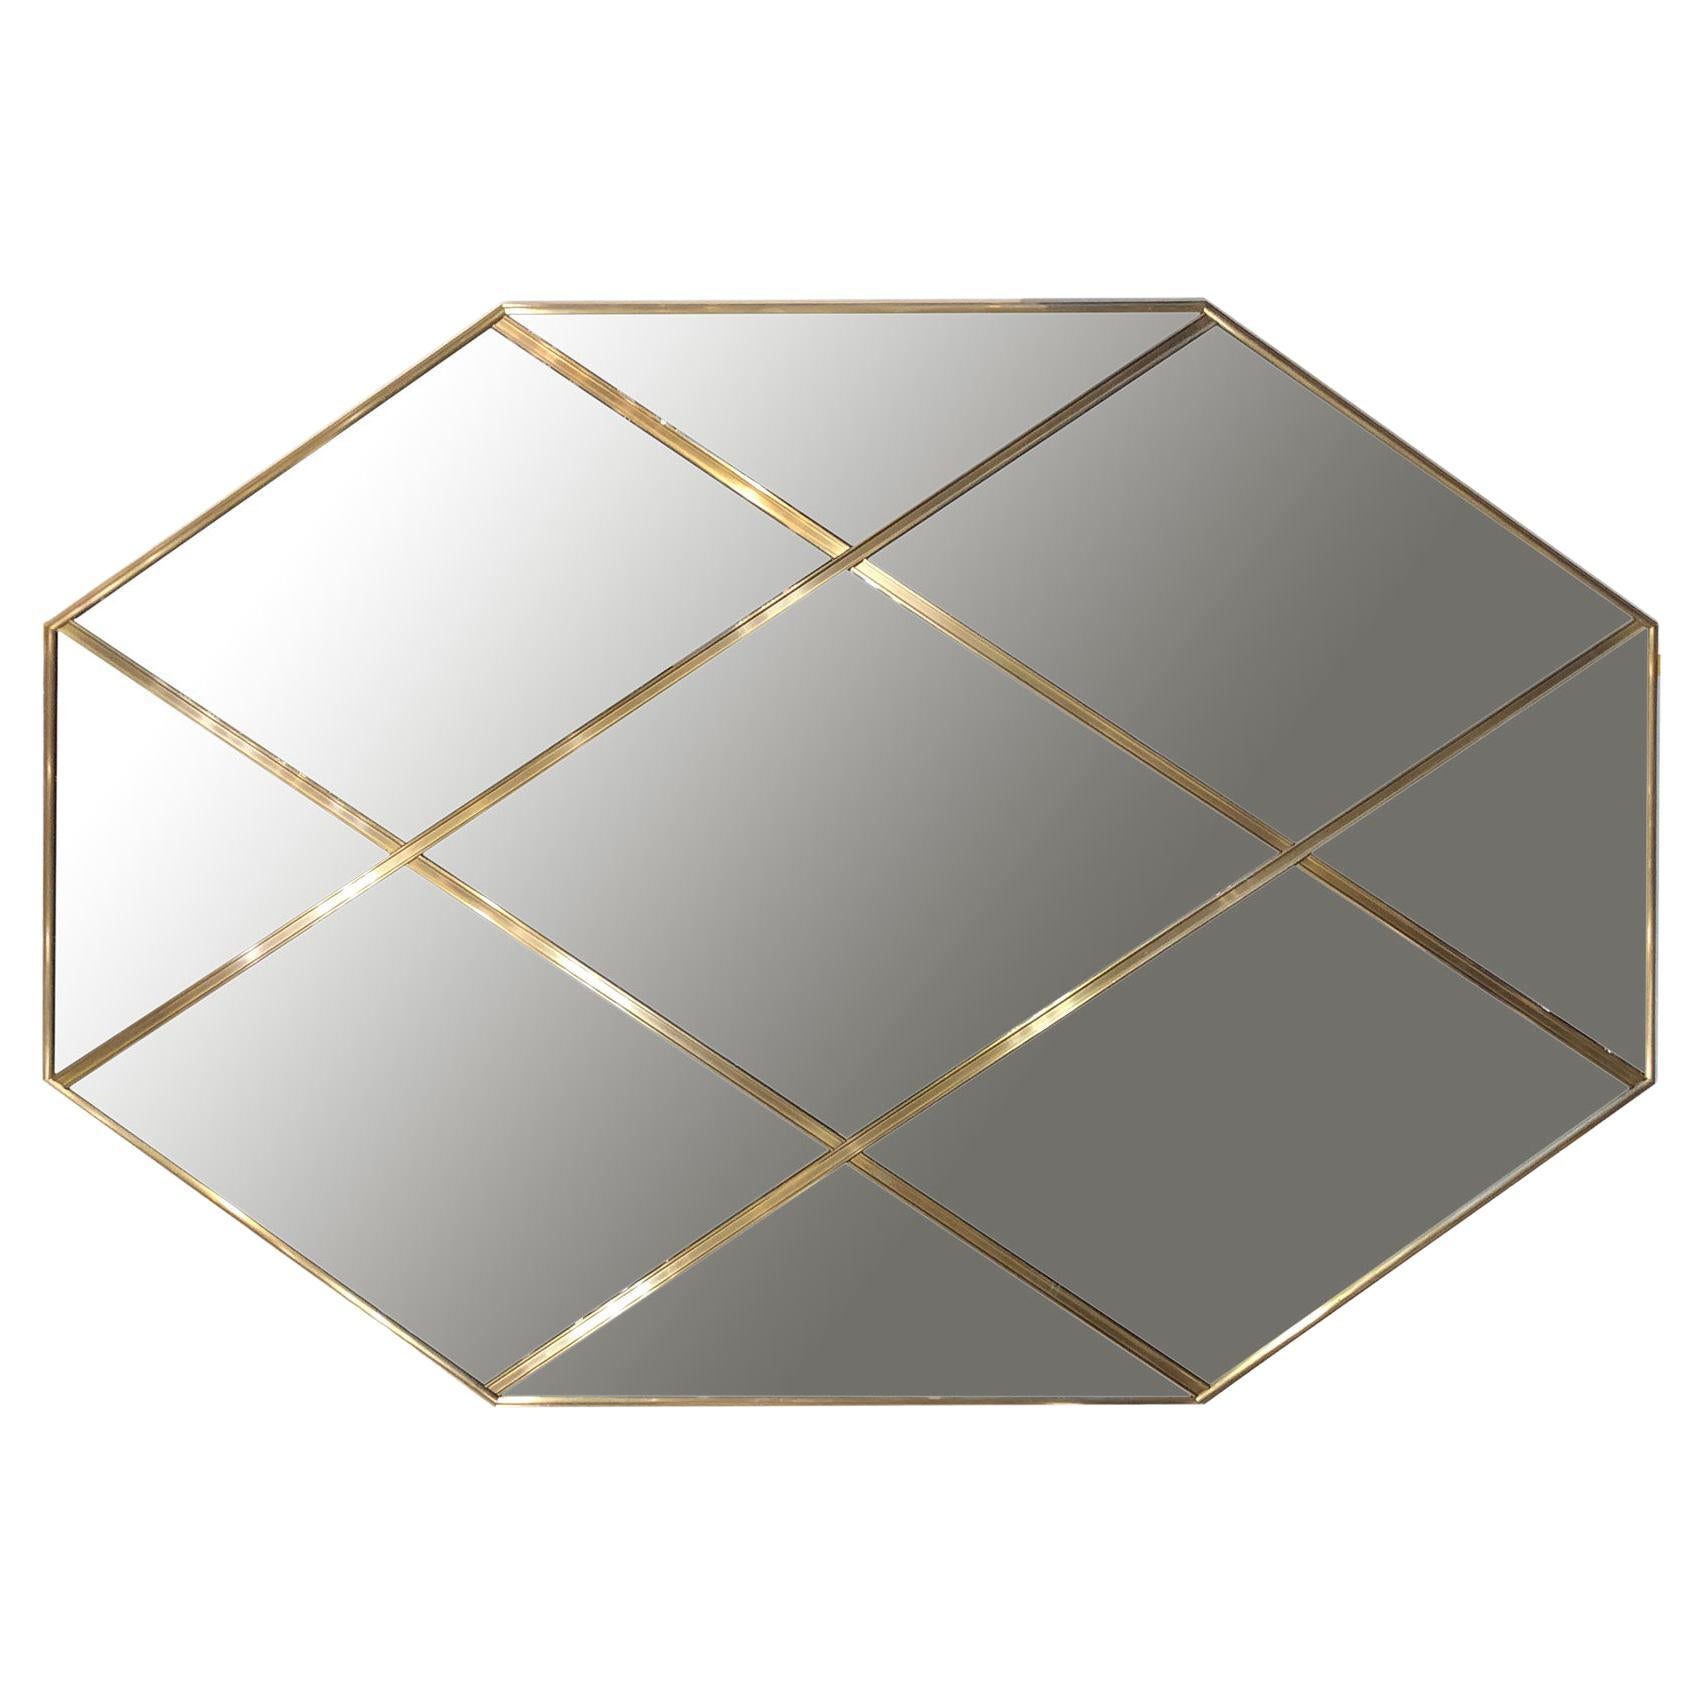 Contemporary Octagonal Art Deco Style Brass Paneled Smoked Mirror 160 X 110 CM